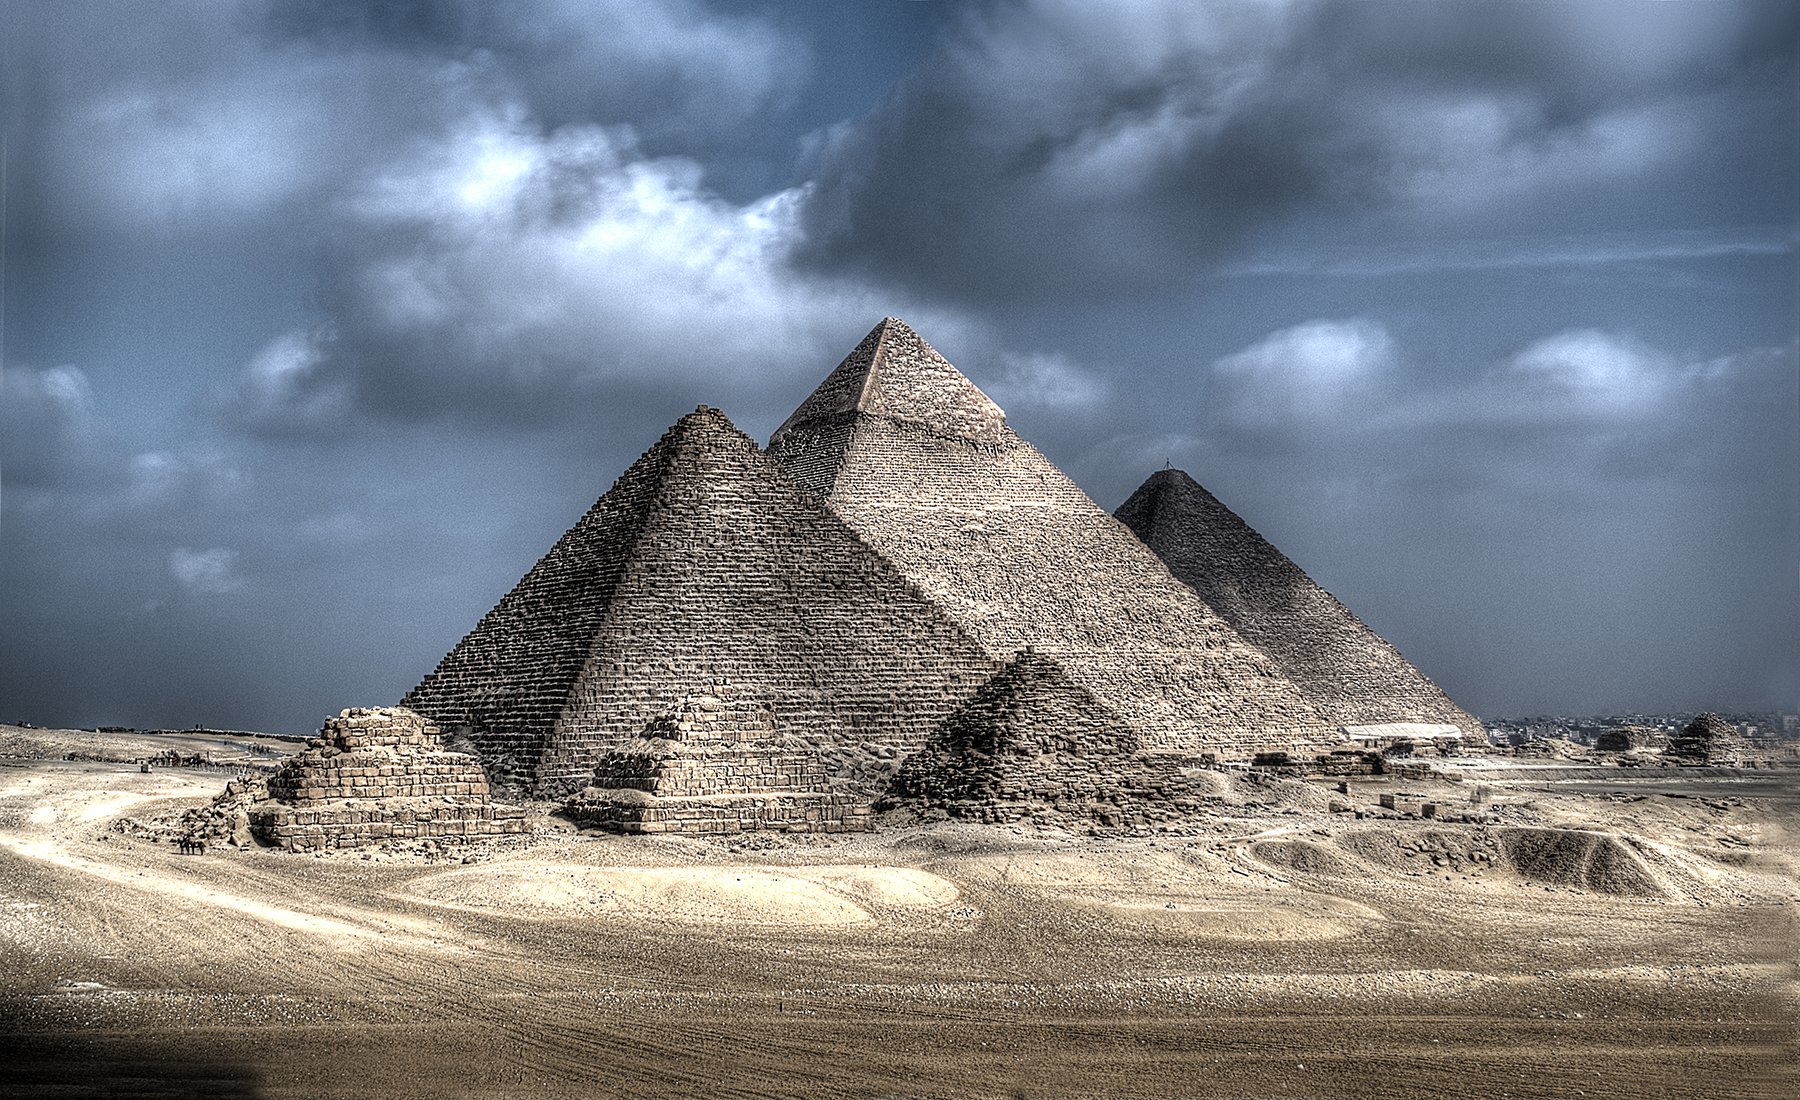 Misr piramidalari haqida. Пирамида Хеопса Каир. Великие пирамиды Гизы. Долина Гизы Египет. Пирамиды Гизы древний Египет.